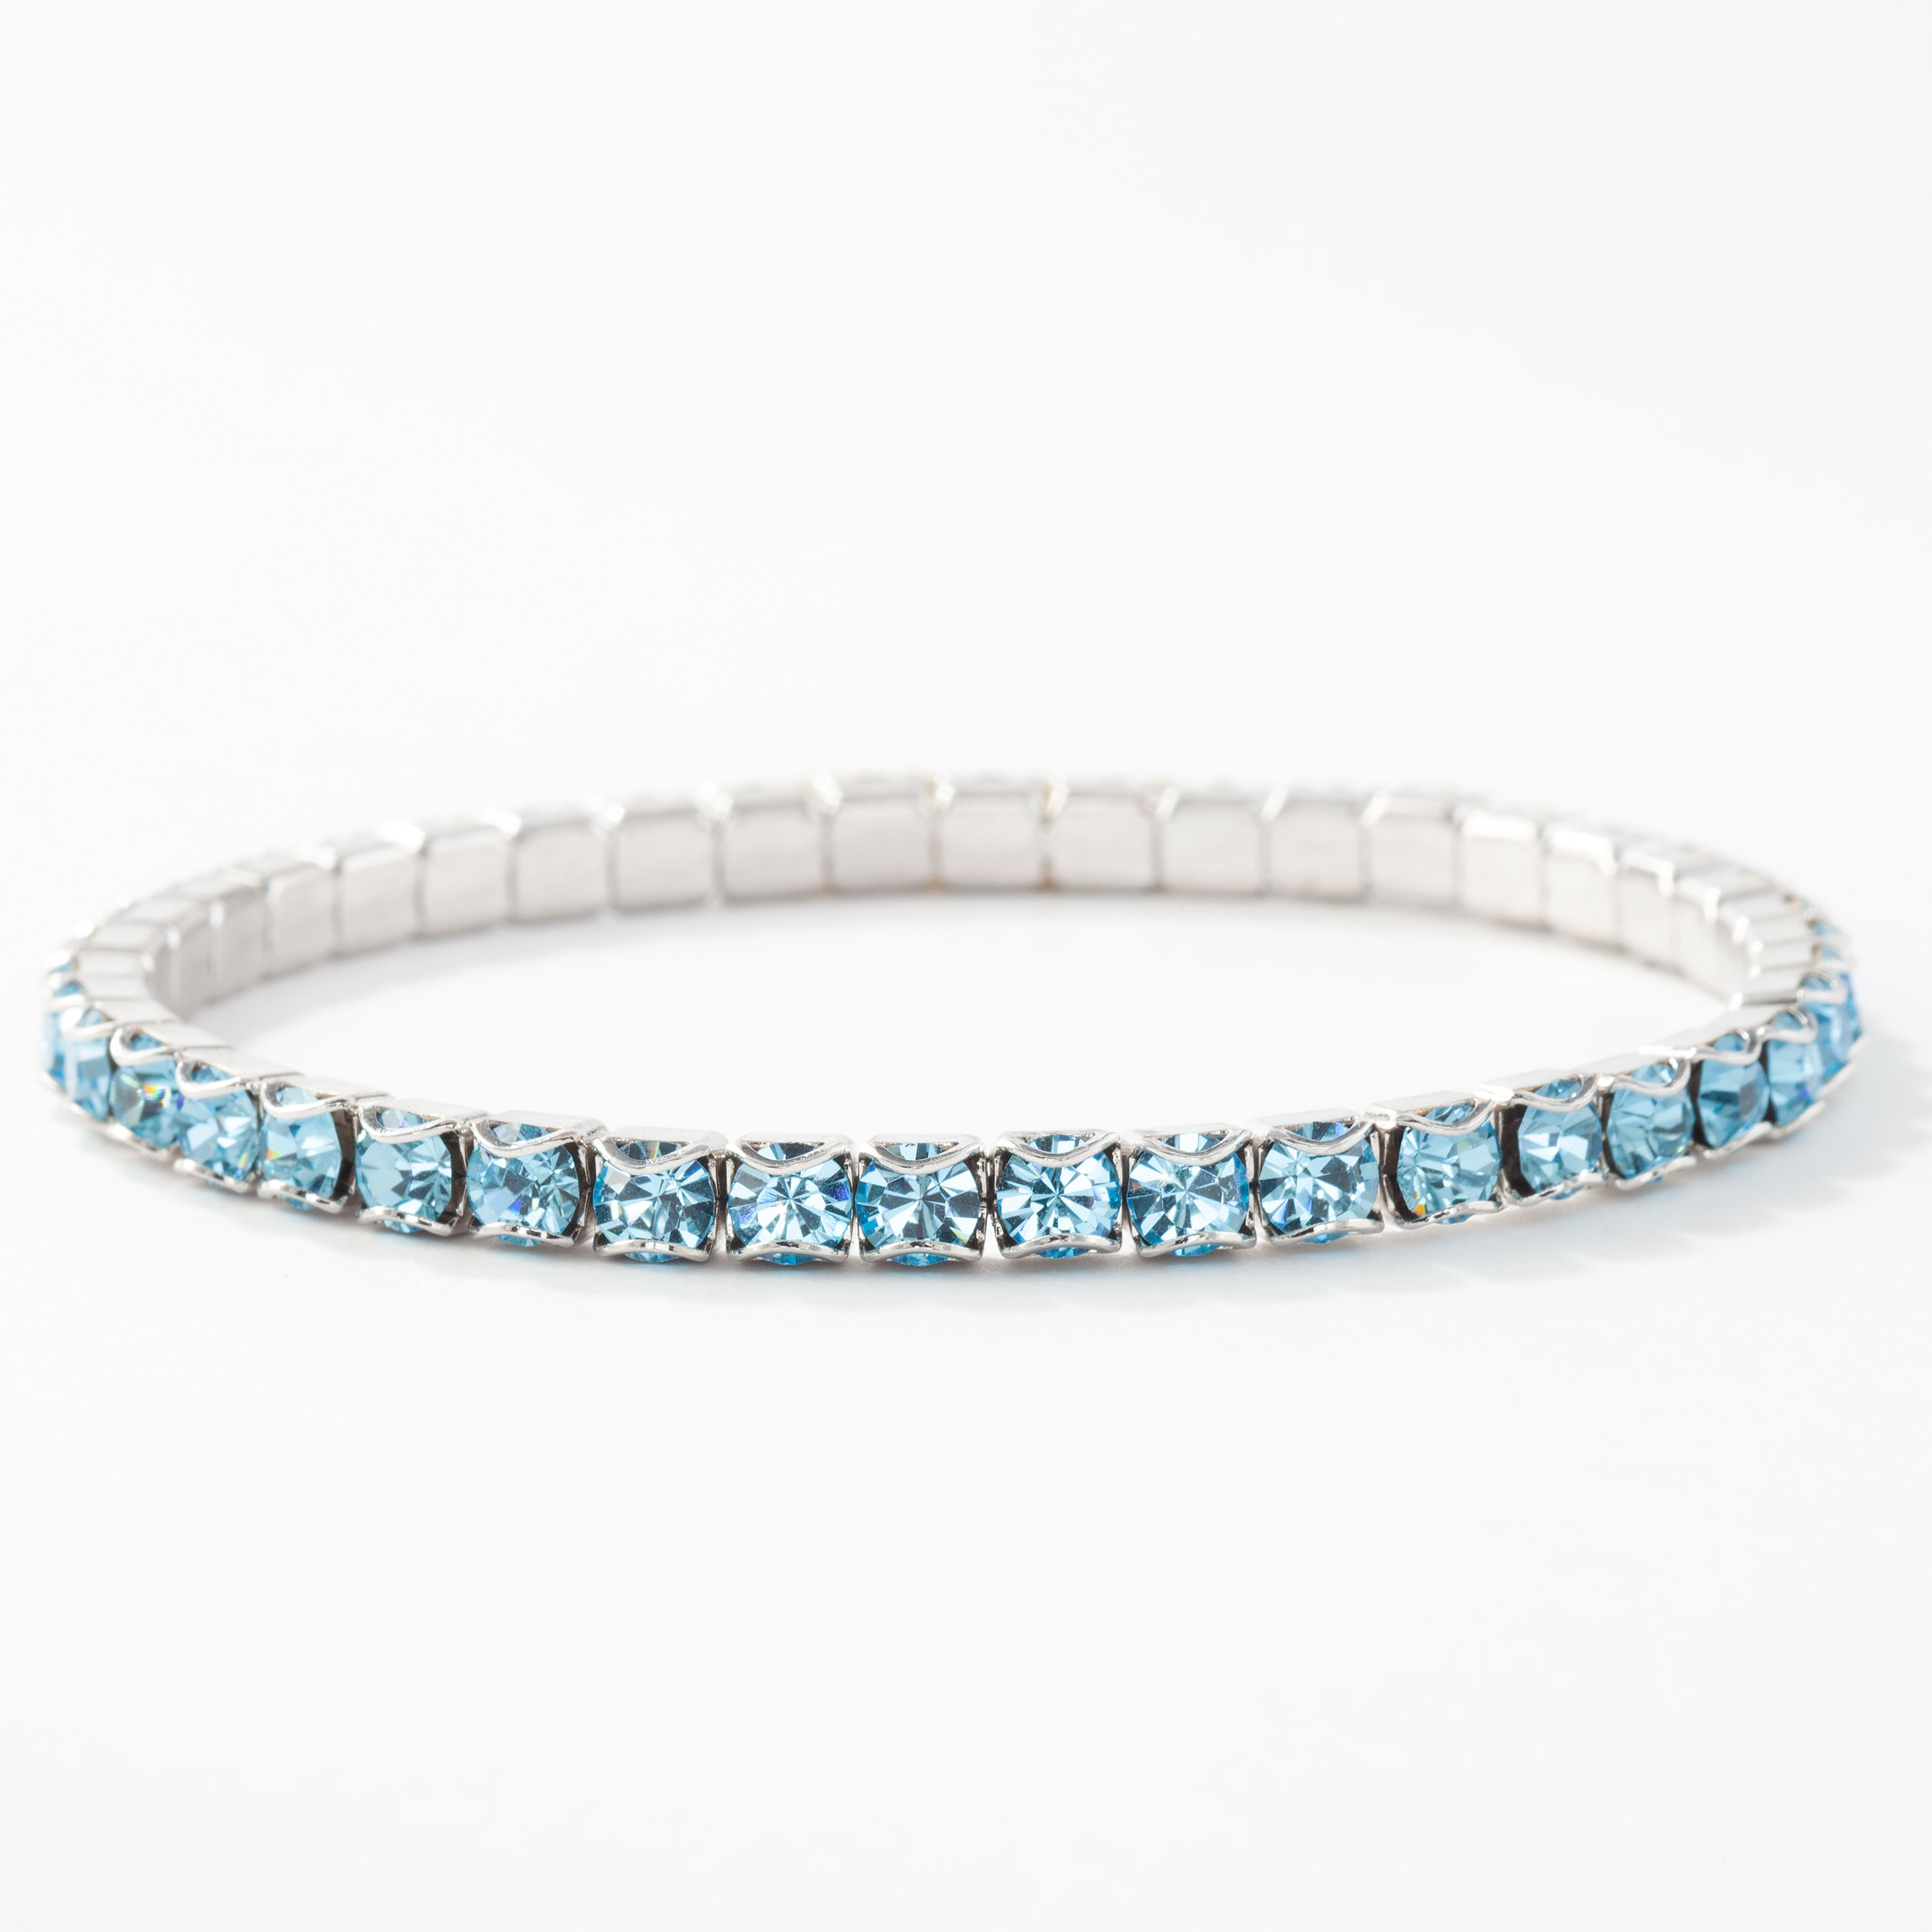 Buy March Birthstone Bracelet, Raw Crystal Aquamarine Bracelet, 925k  Sterling Silver Jewelry, Sky Blue Aquamarine Chakra Bracelets for Women  Online in India - Etsy